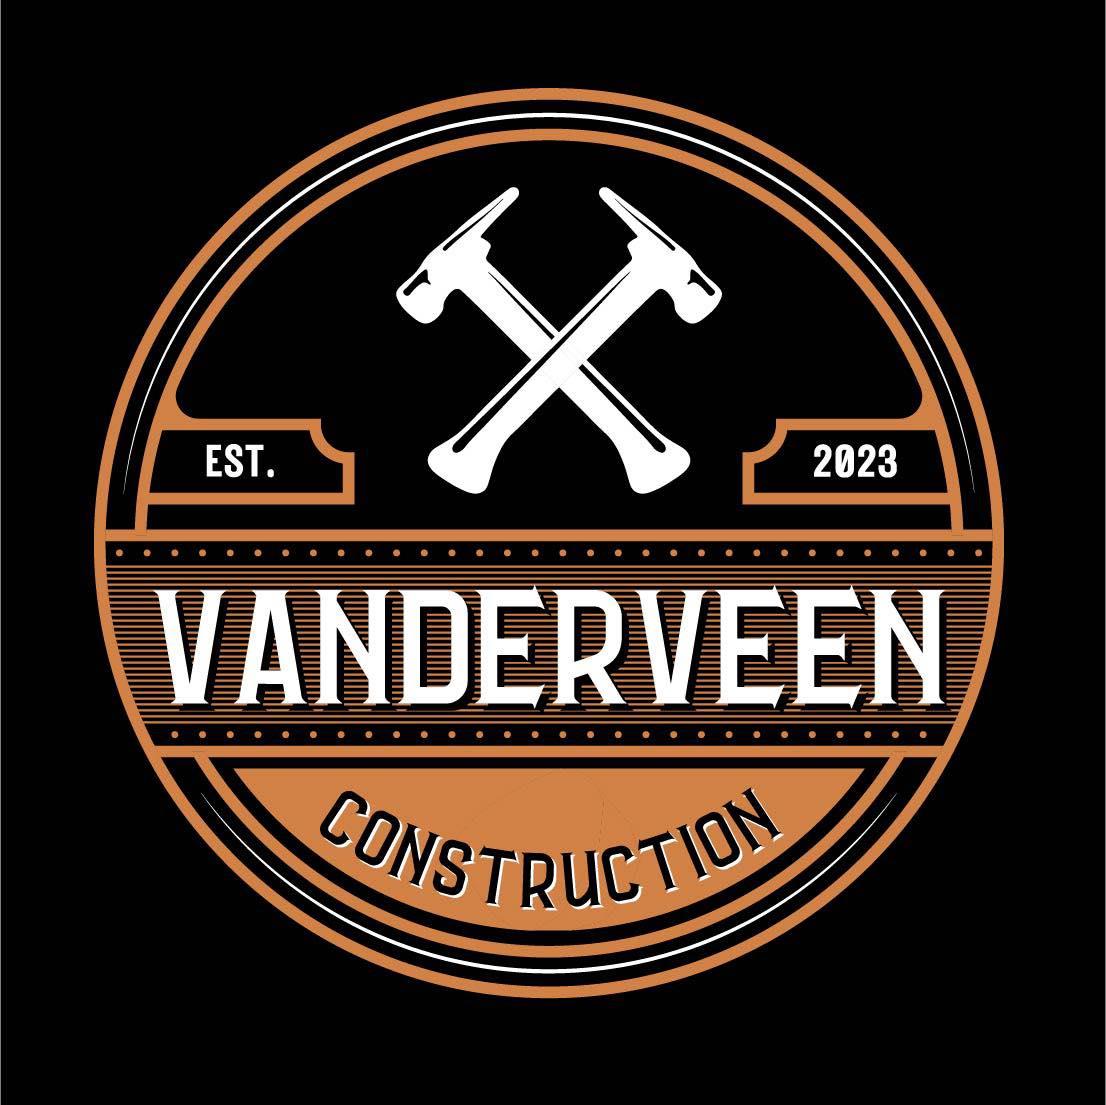 Vanderveen Construction Ltd